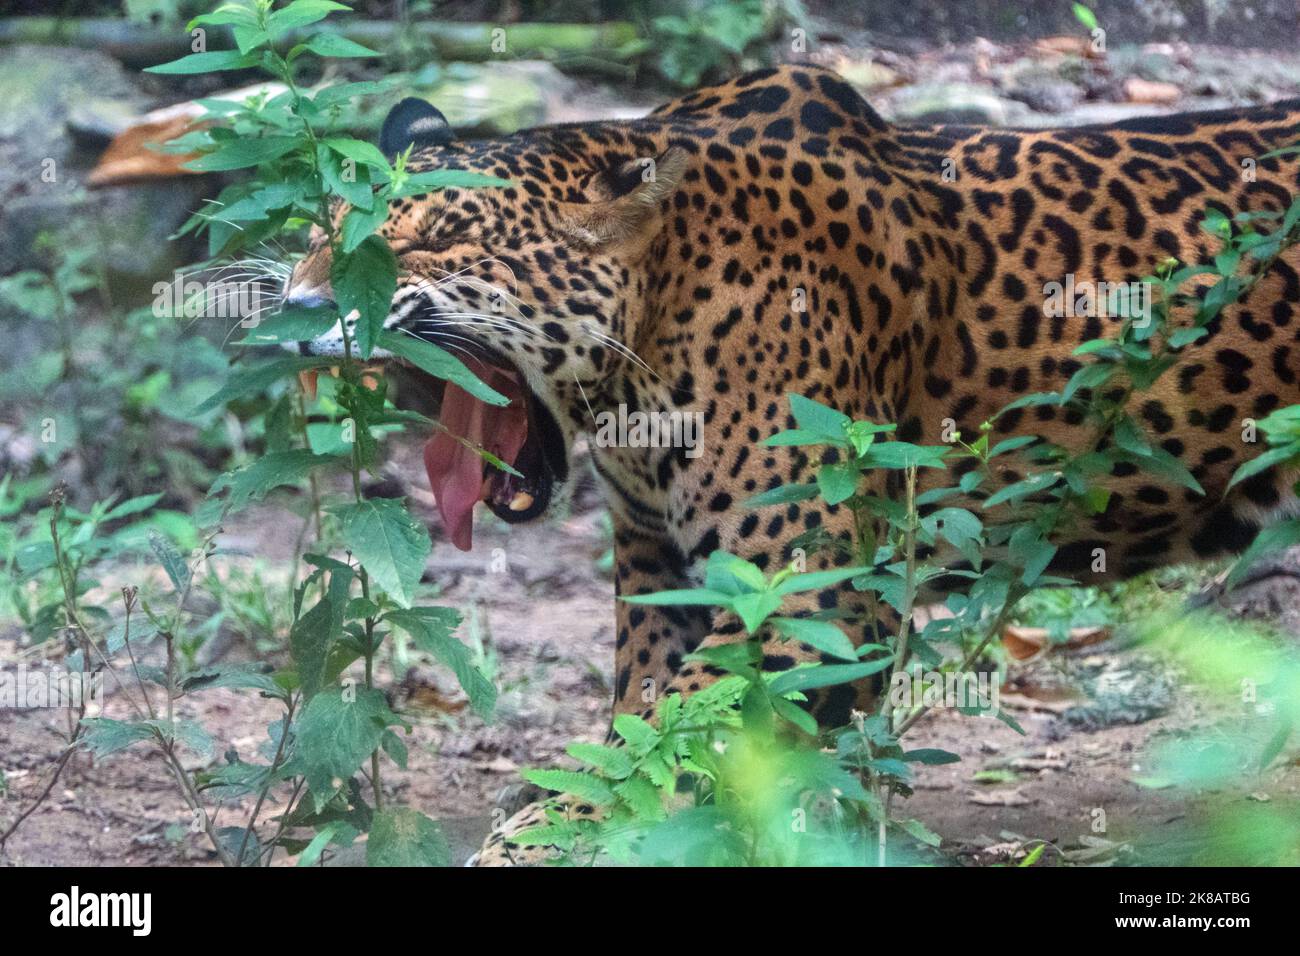 Female jaguar in zoo cage in Chiapas, Mexico. Big cat (Panthera onca) yawning in enclosure Stock Photo